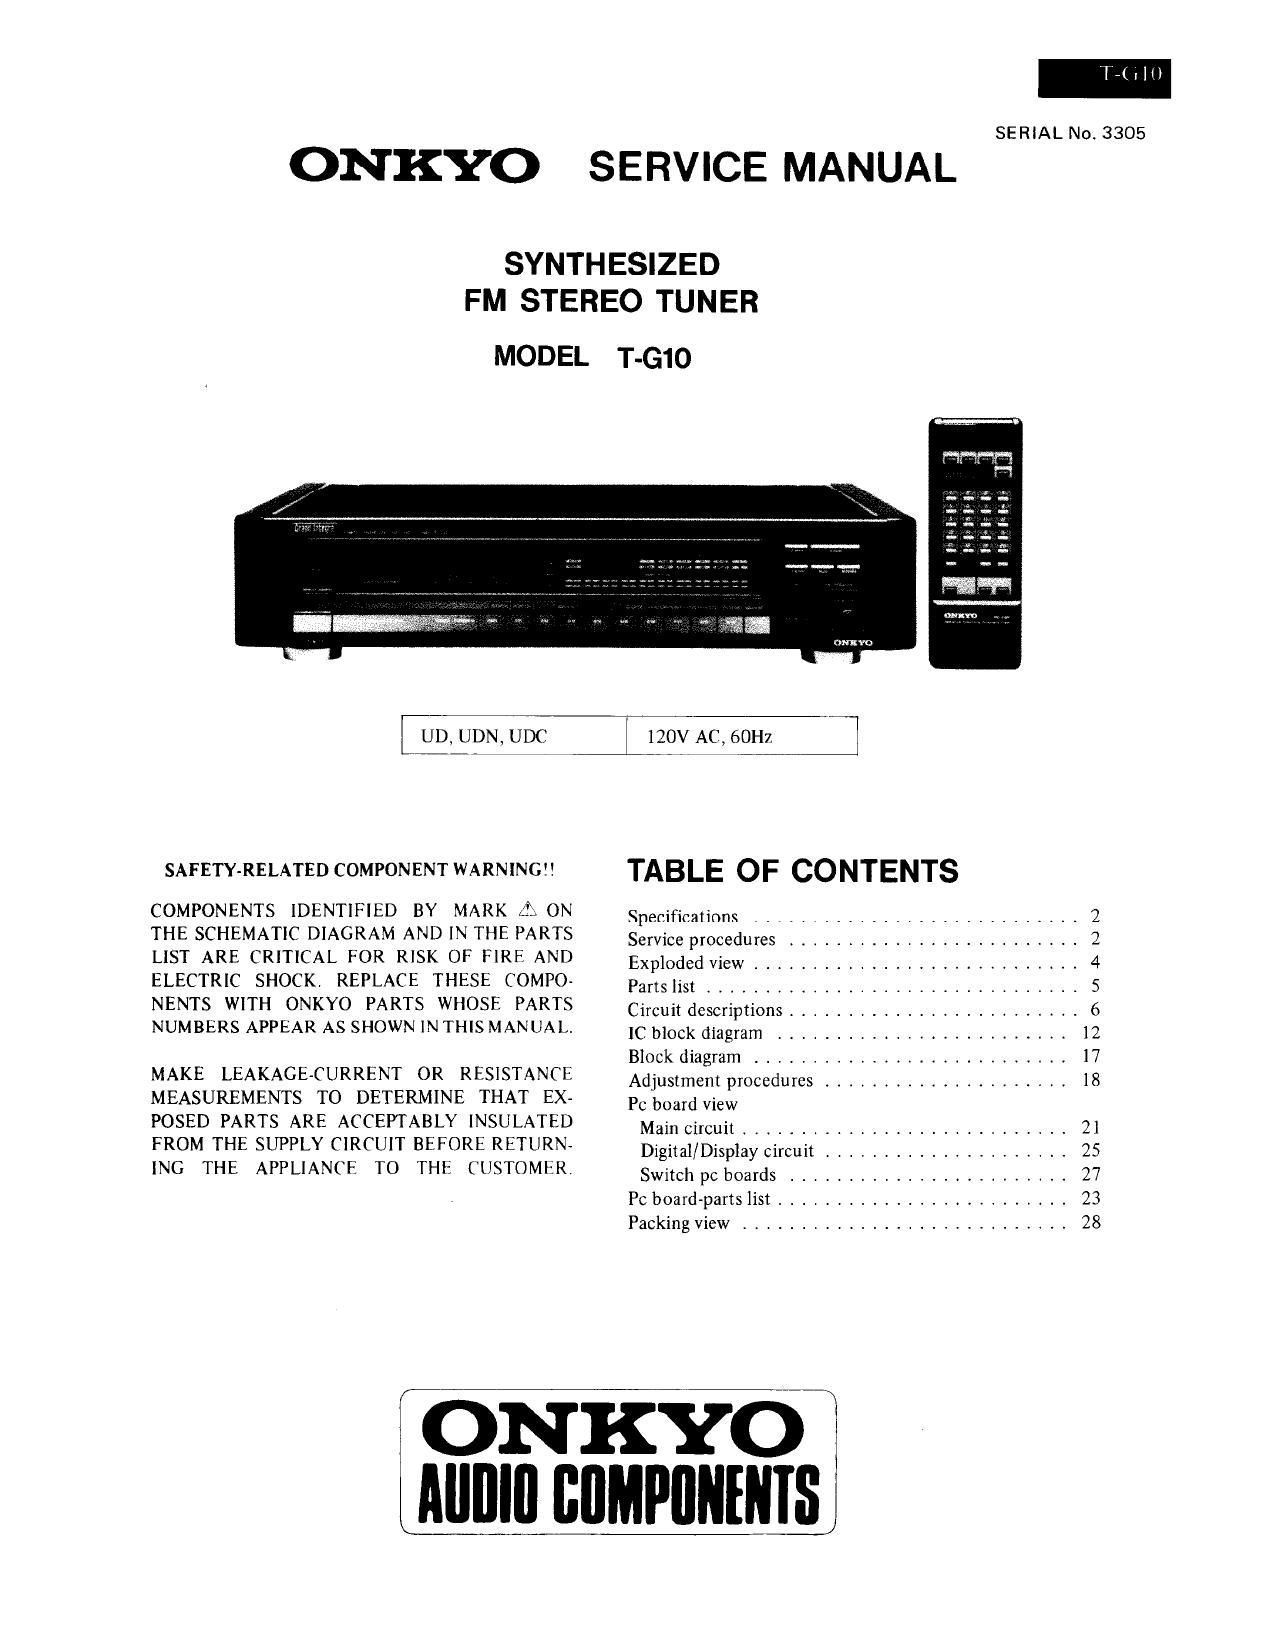 Onkyo TG 10 Service Manual